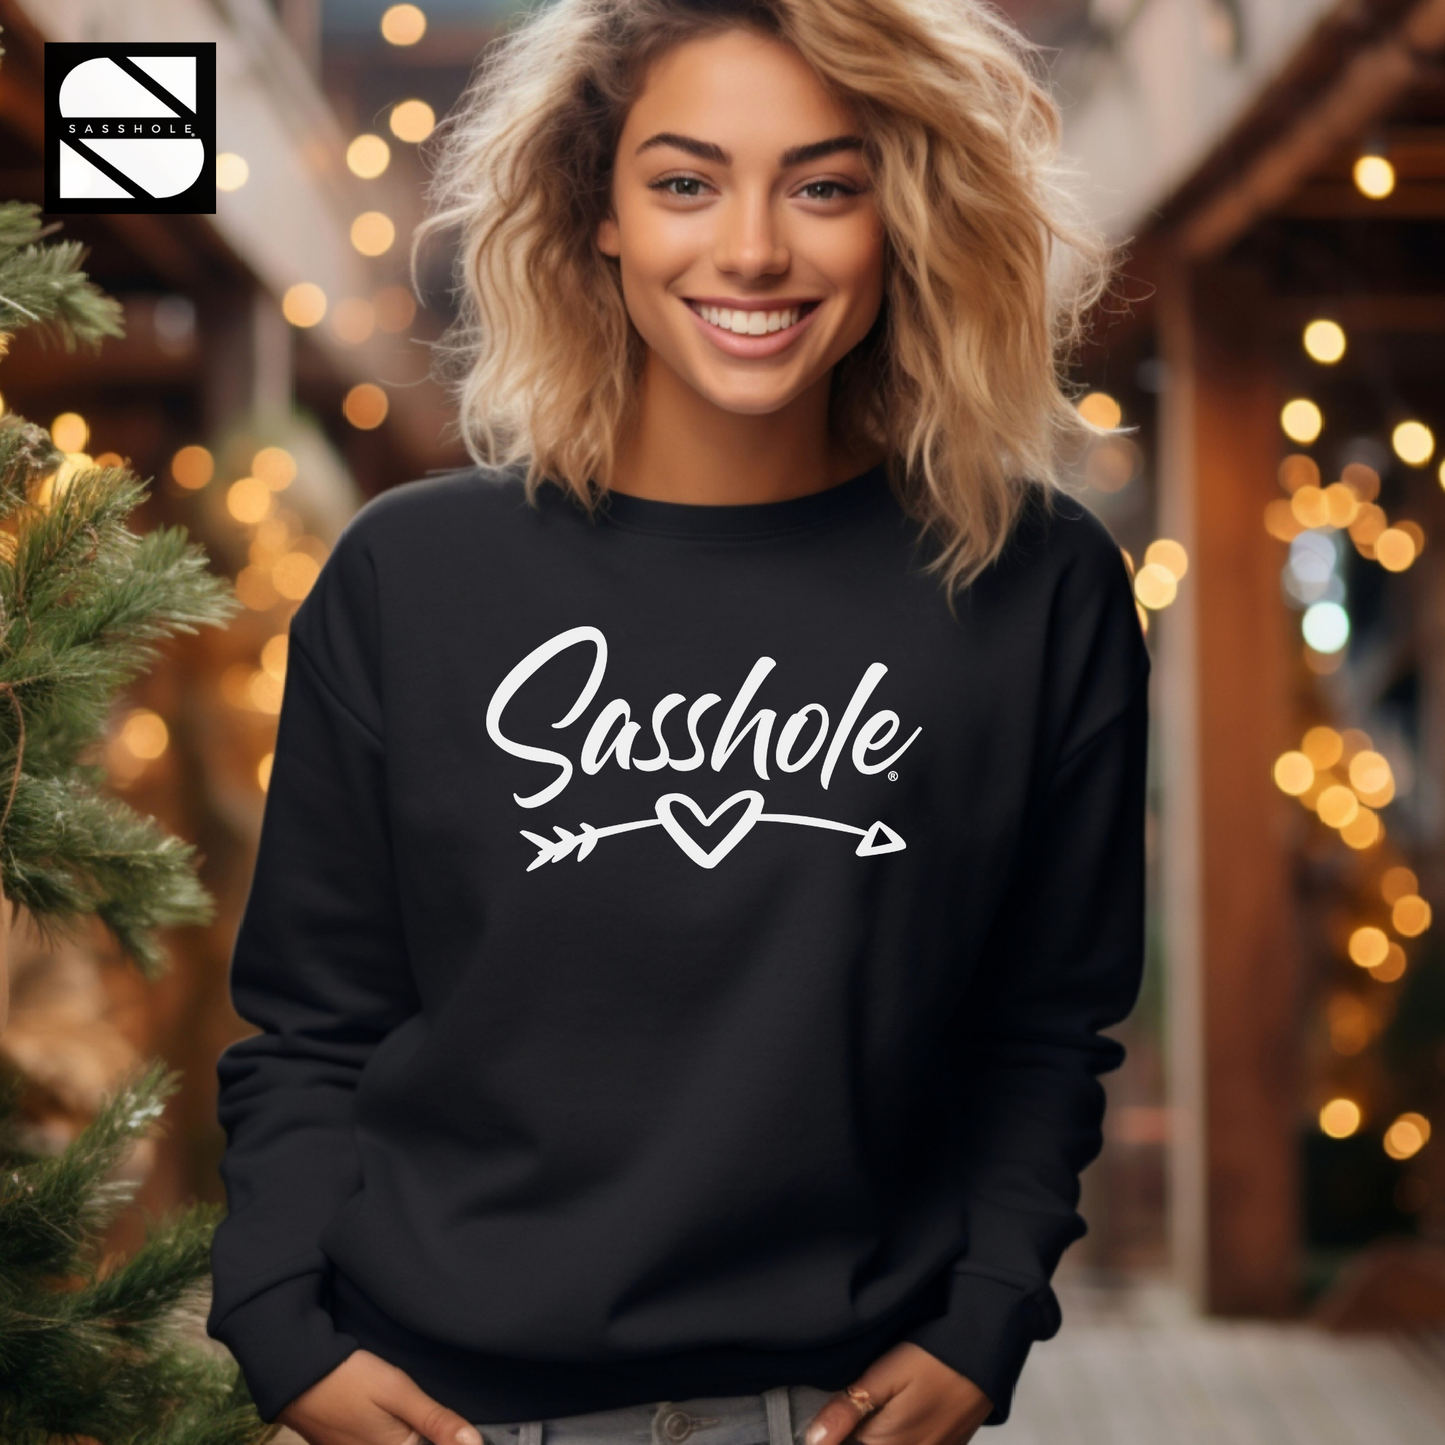 Women's Funny Black Sweatshirt